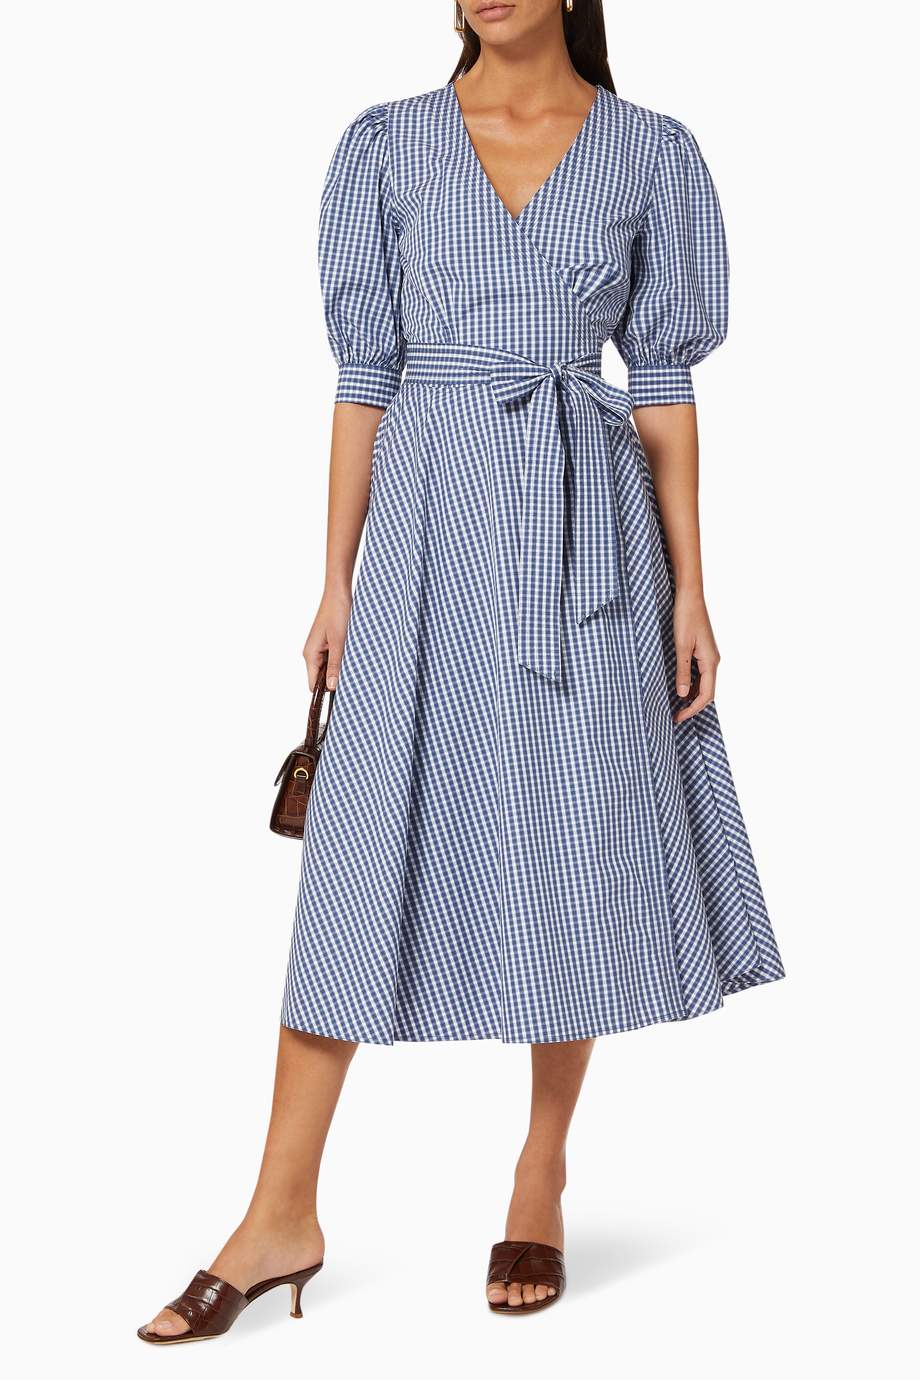 Shop Polo Ralph Lauren Blue Gingham Cotton Wrap Dress for Women ...